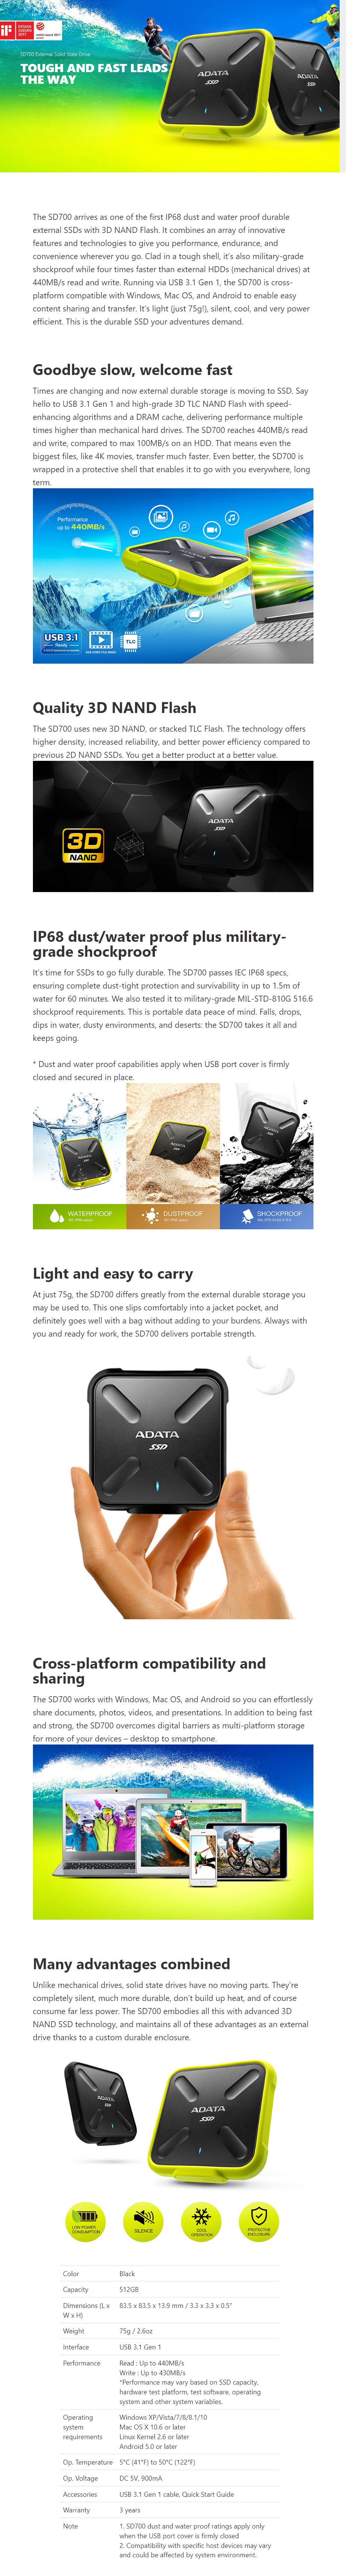 Adata SD700 512GB USB 3.1 Portable External Rugged SSD Hard Drive - Black  - Overview 1